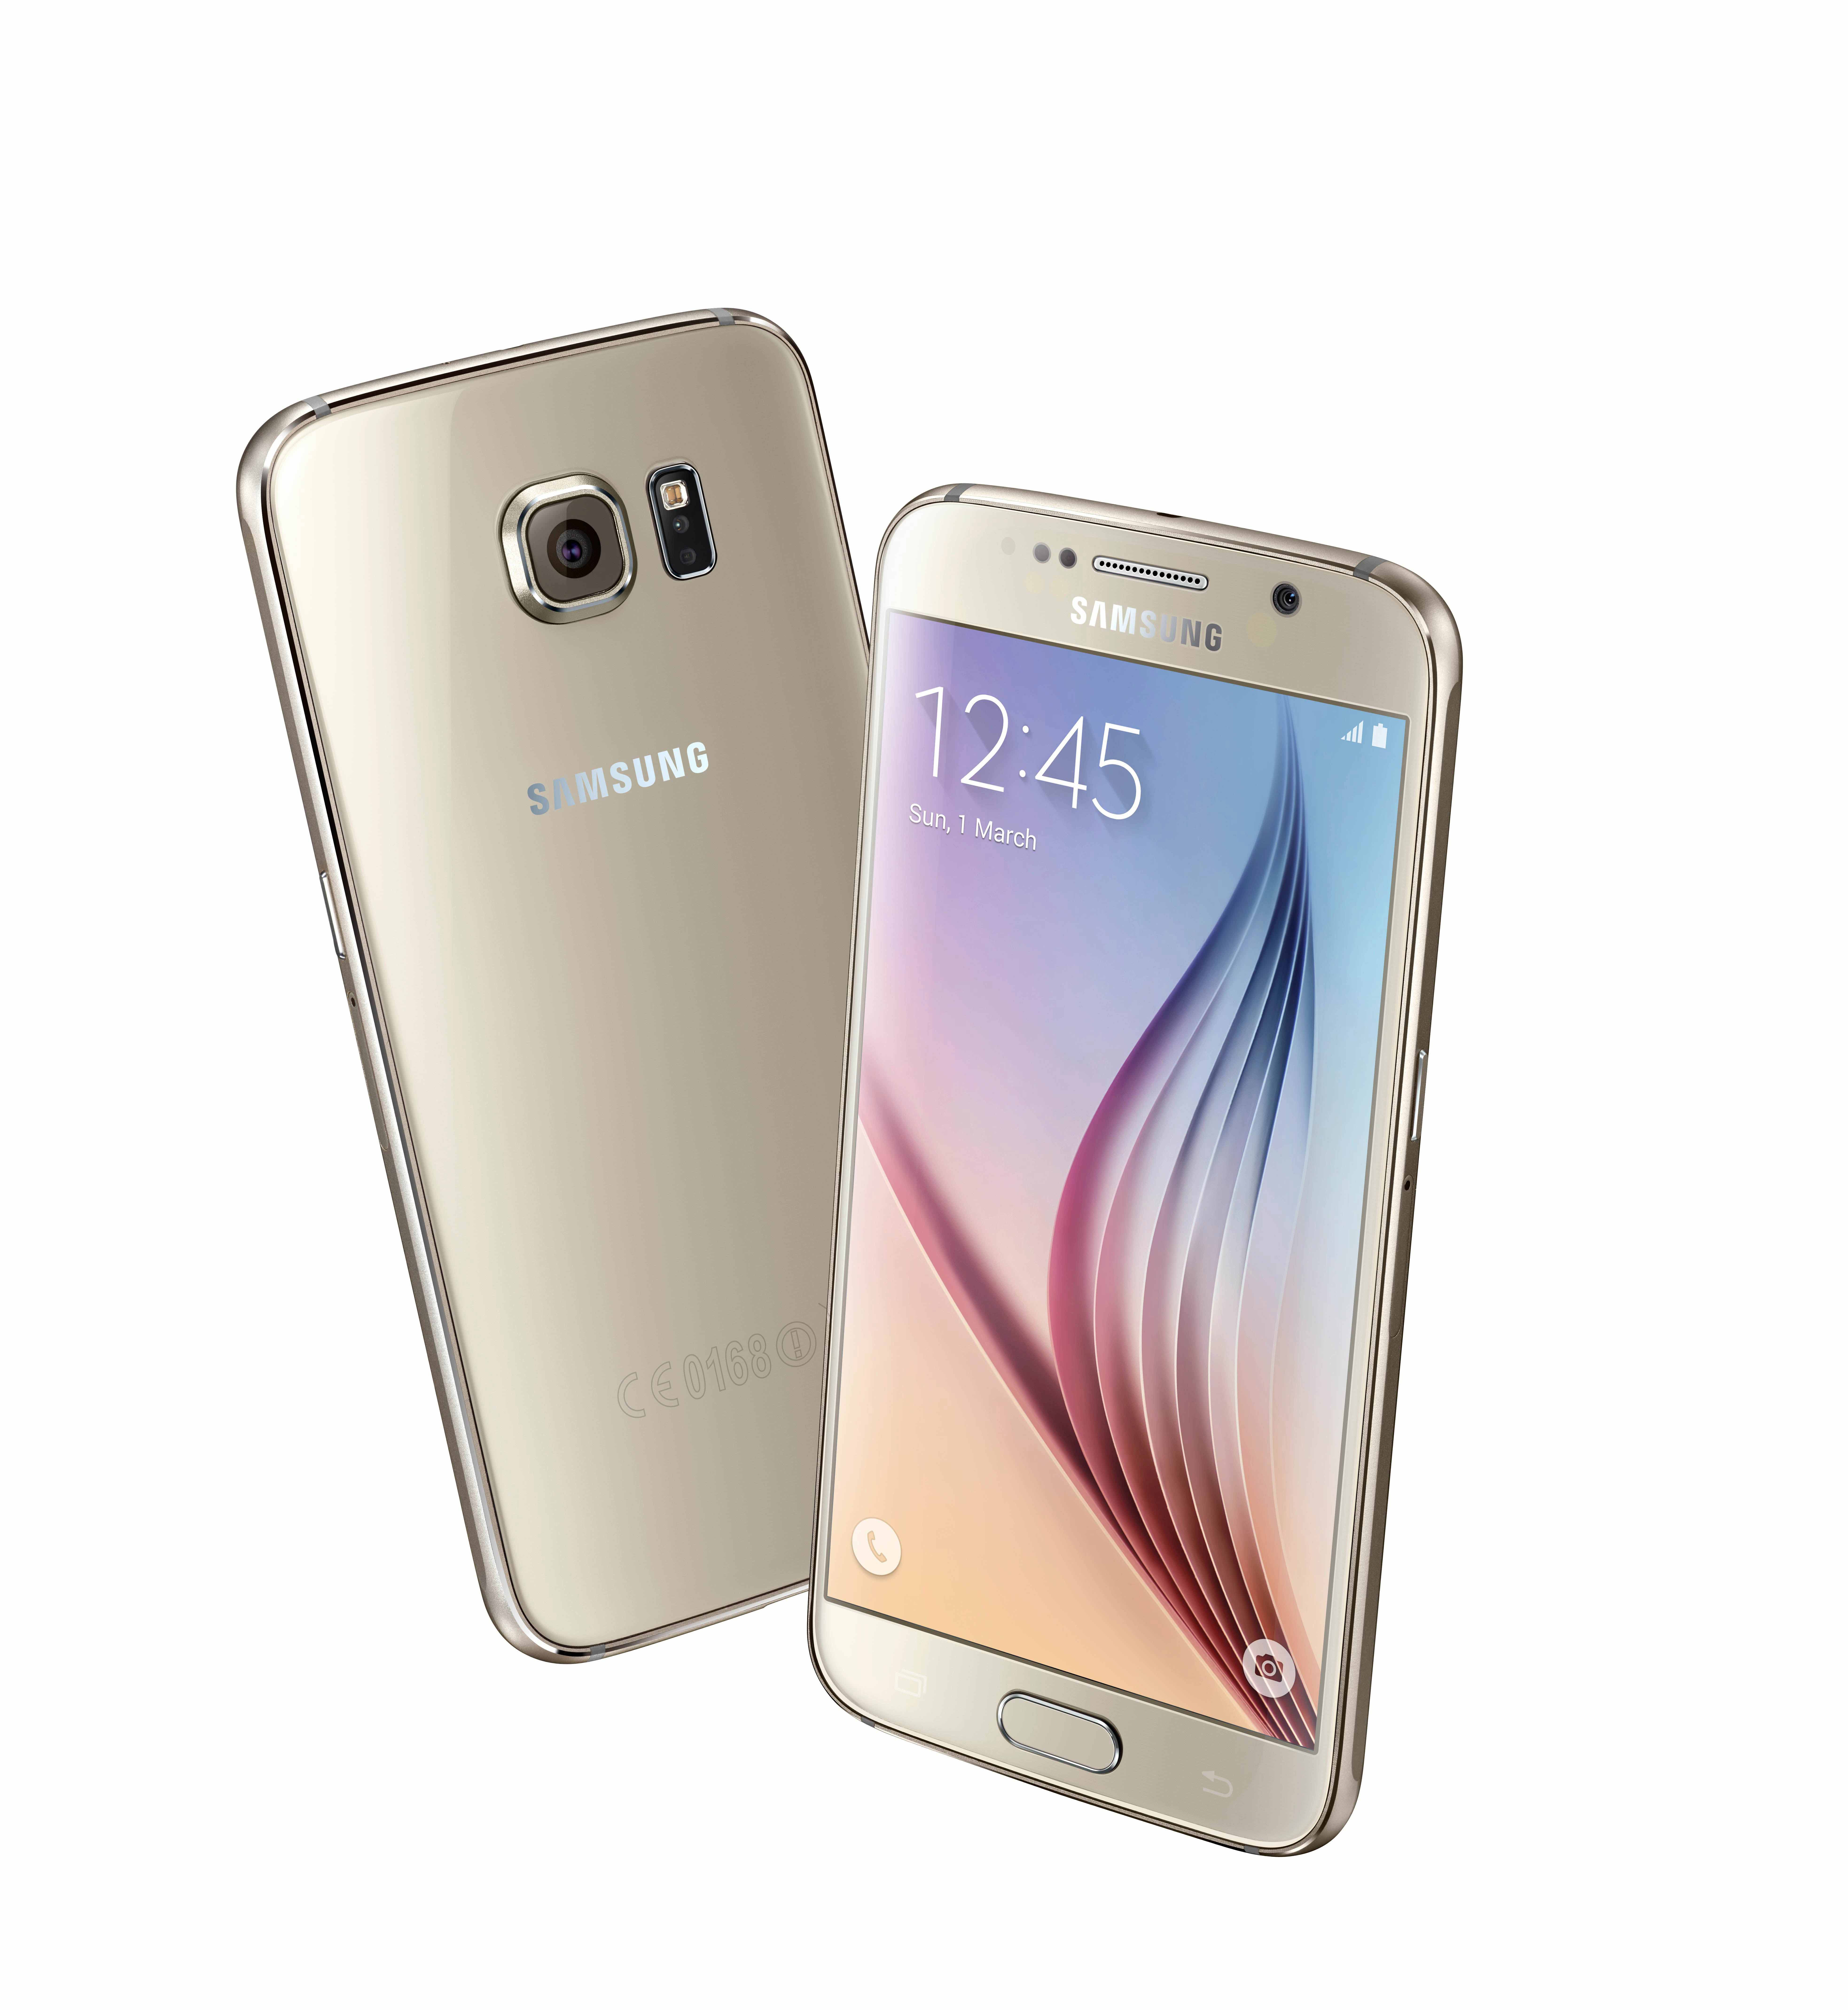 oortelefoon nemen Respectvol Samsung Galaxy S6 Smartphone Review - NotebookCheck.net Reviews